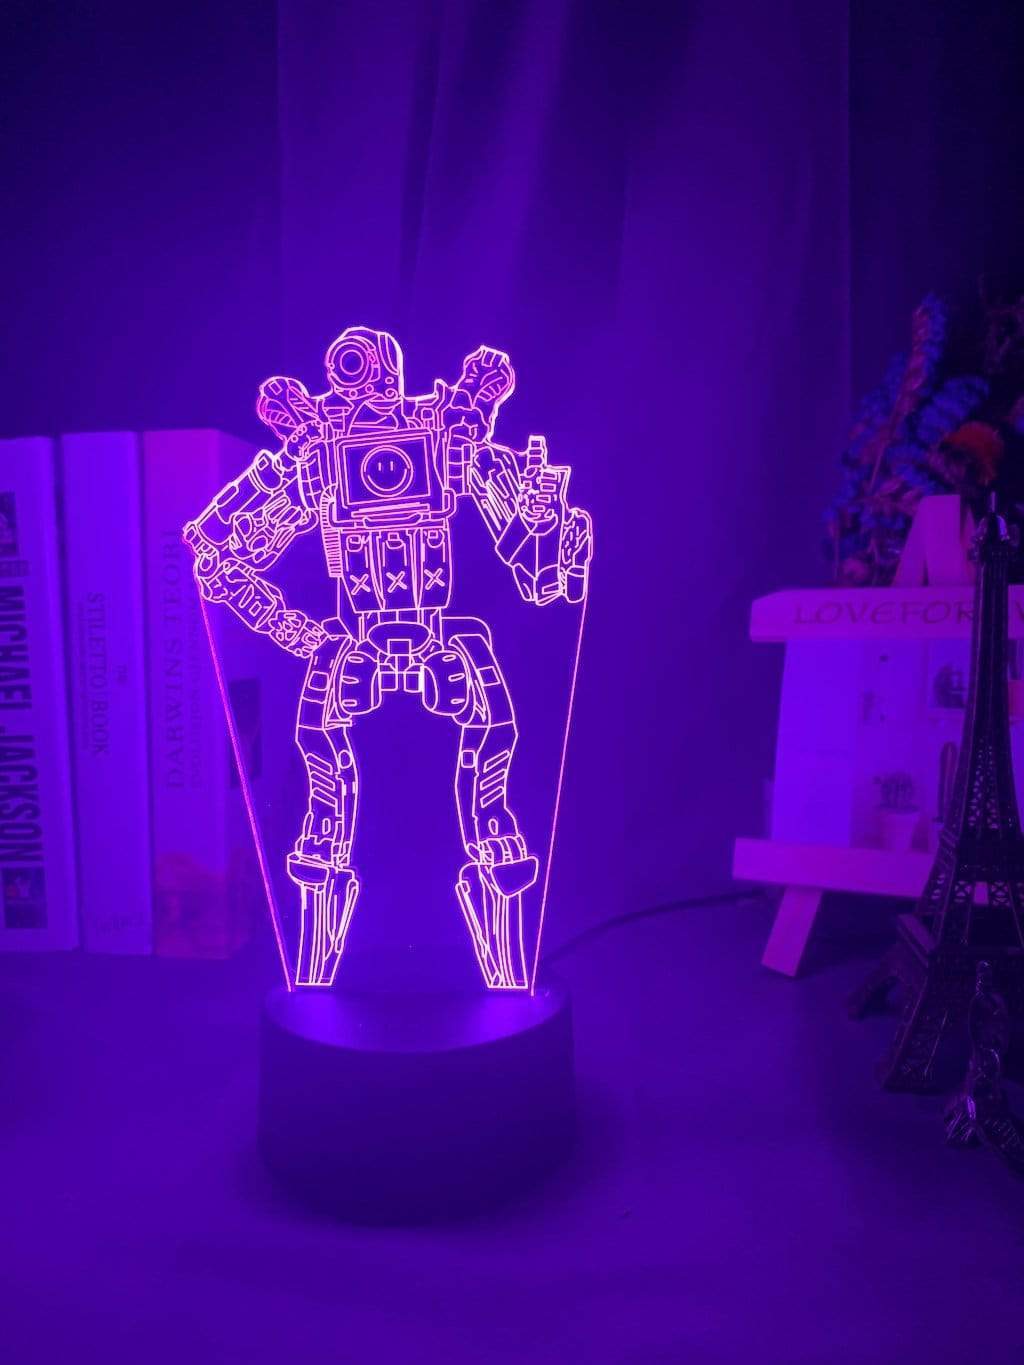 Lampe Apex Legends Hero Pathfinder MRVN Lampe Led 3D veilleuse Décor